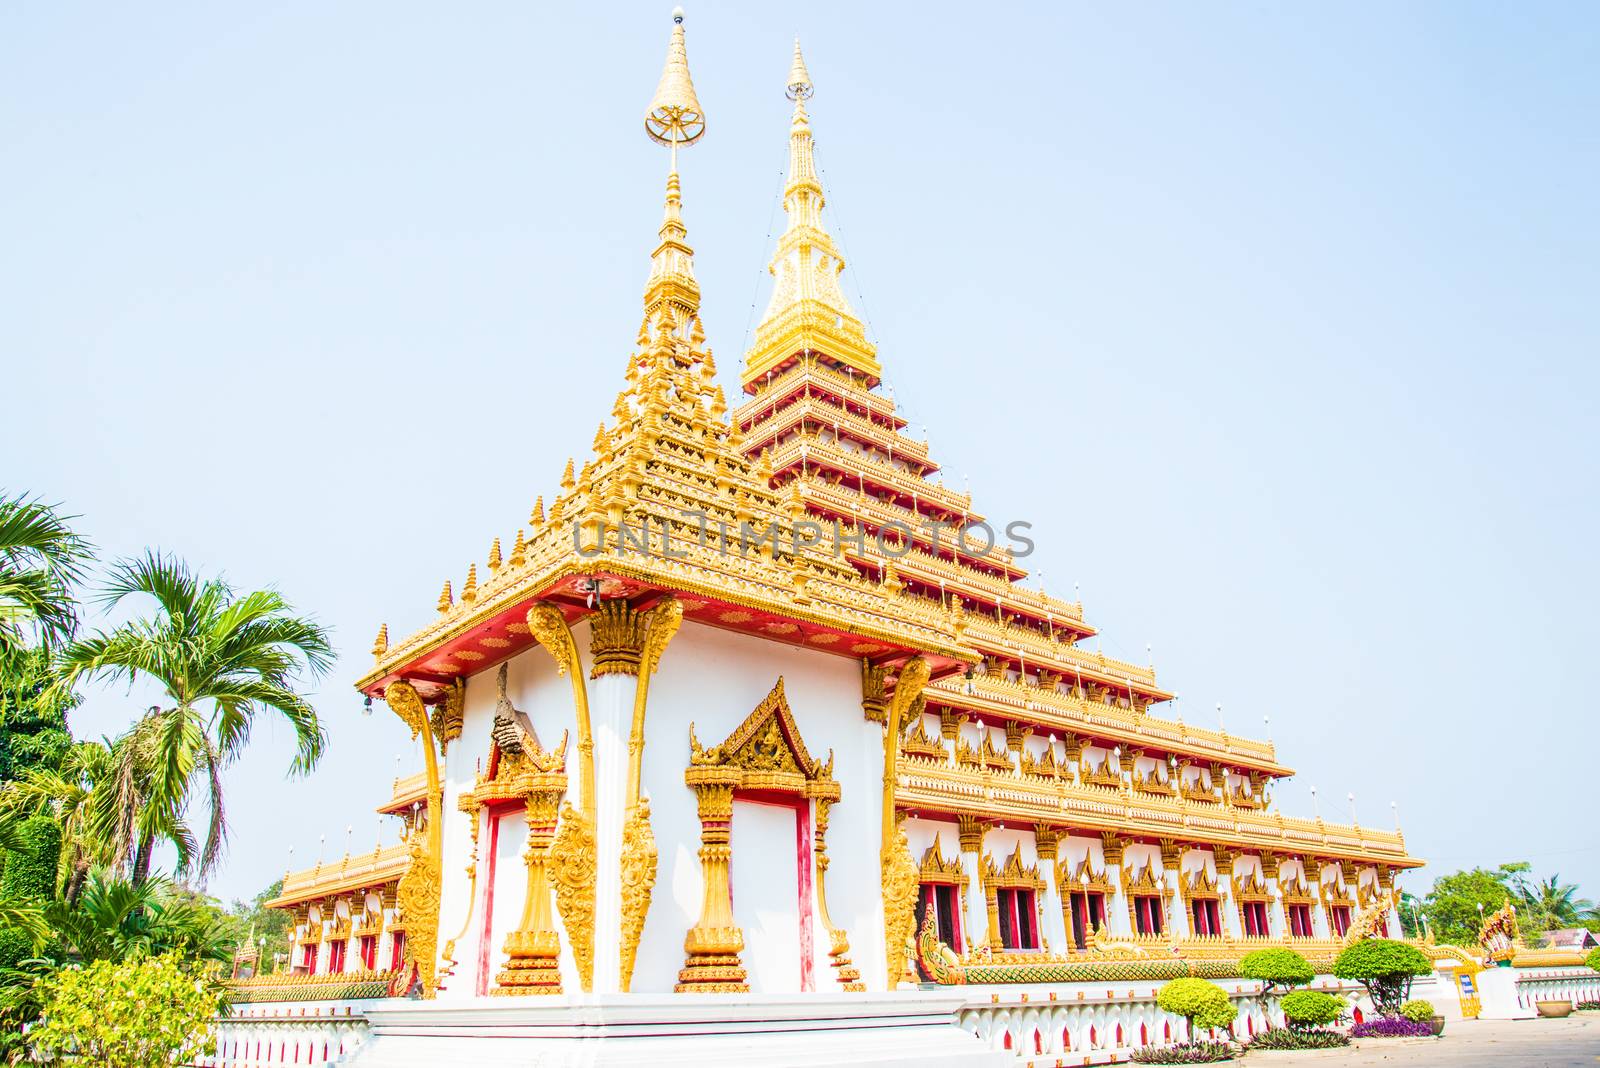 The most beautiful temple in Thailand - Khon Kaen(wat hnong wang)